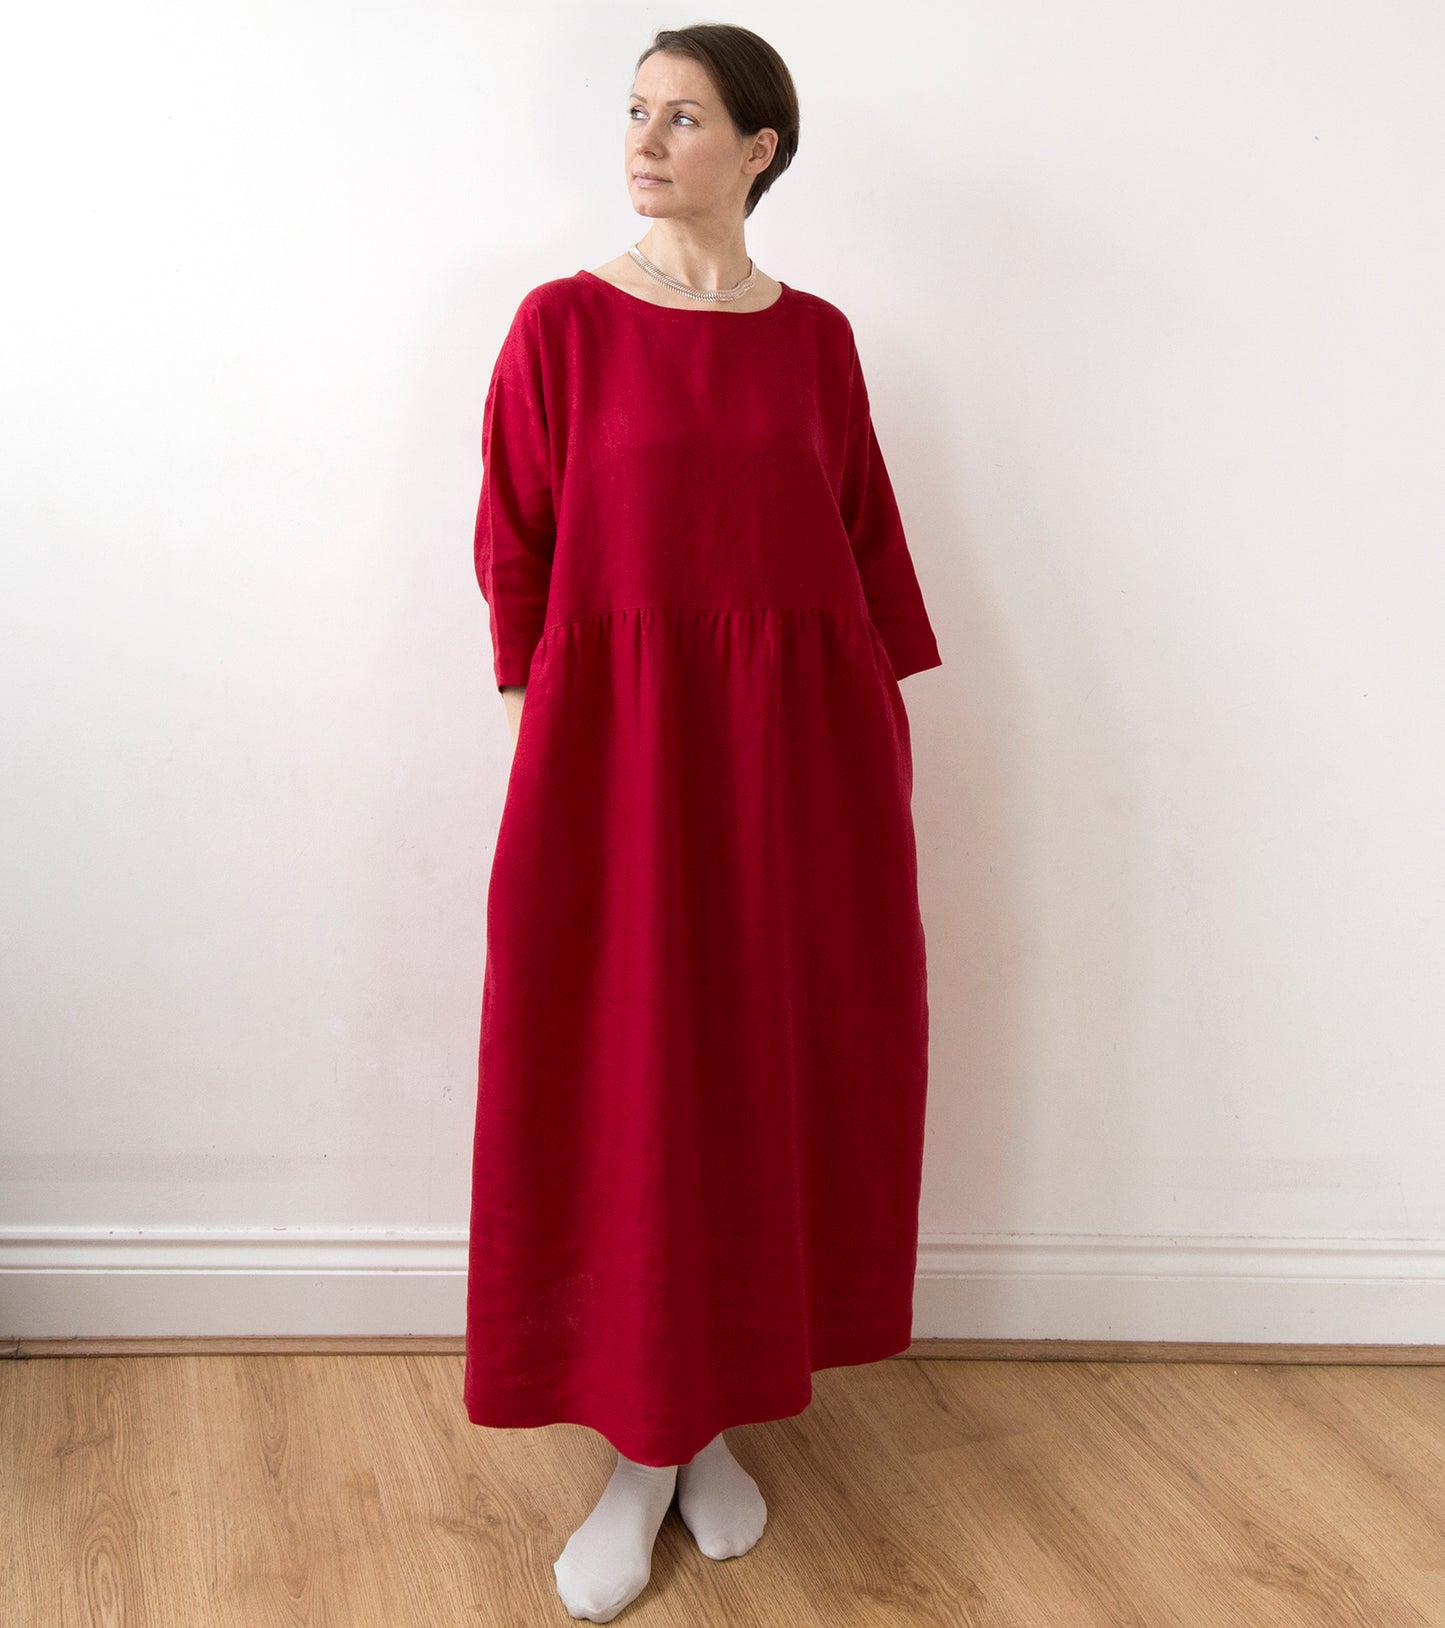 Festive red linen dress, lower-calf length